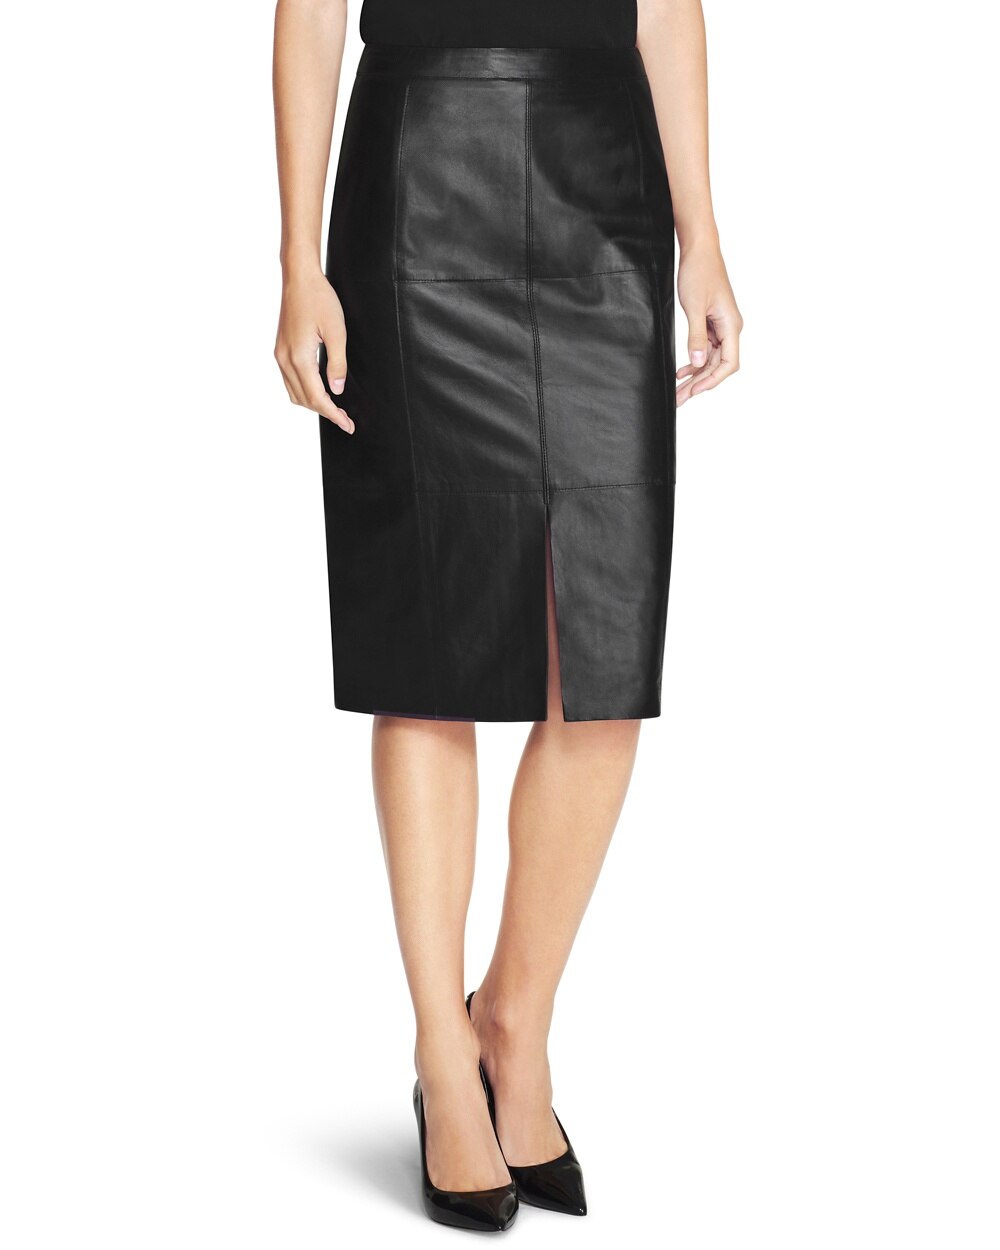 Leather Pencil Skirt - White House Black Market